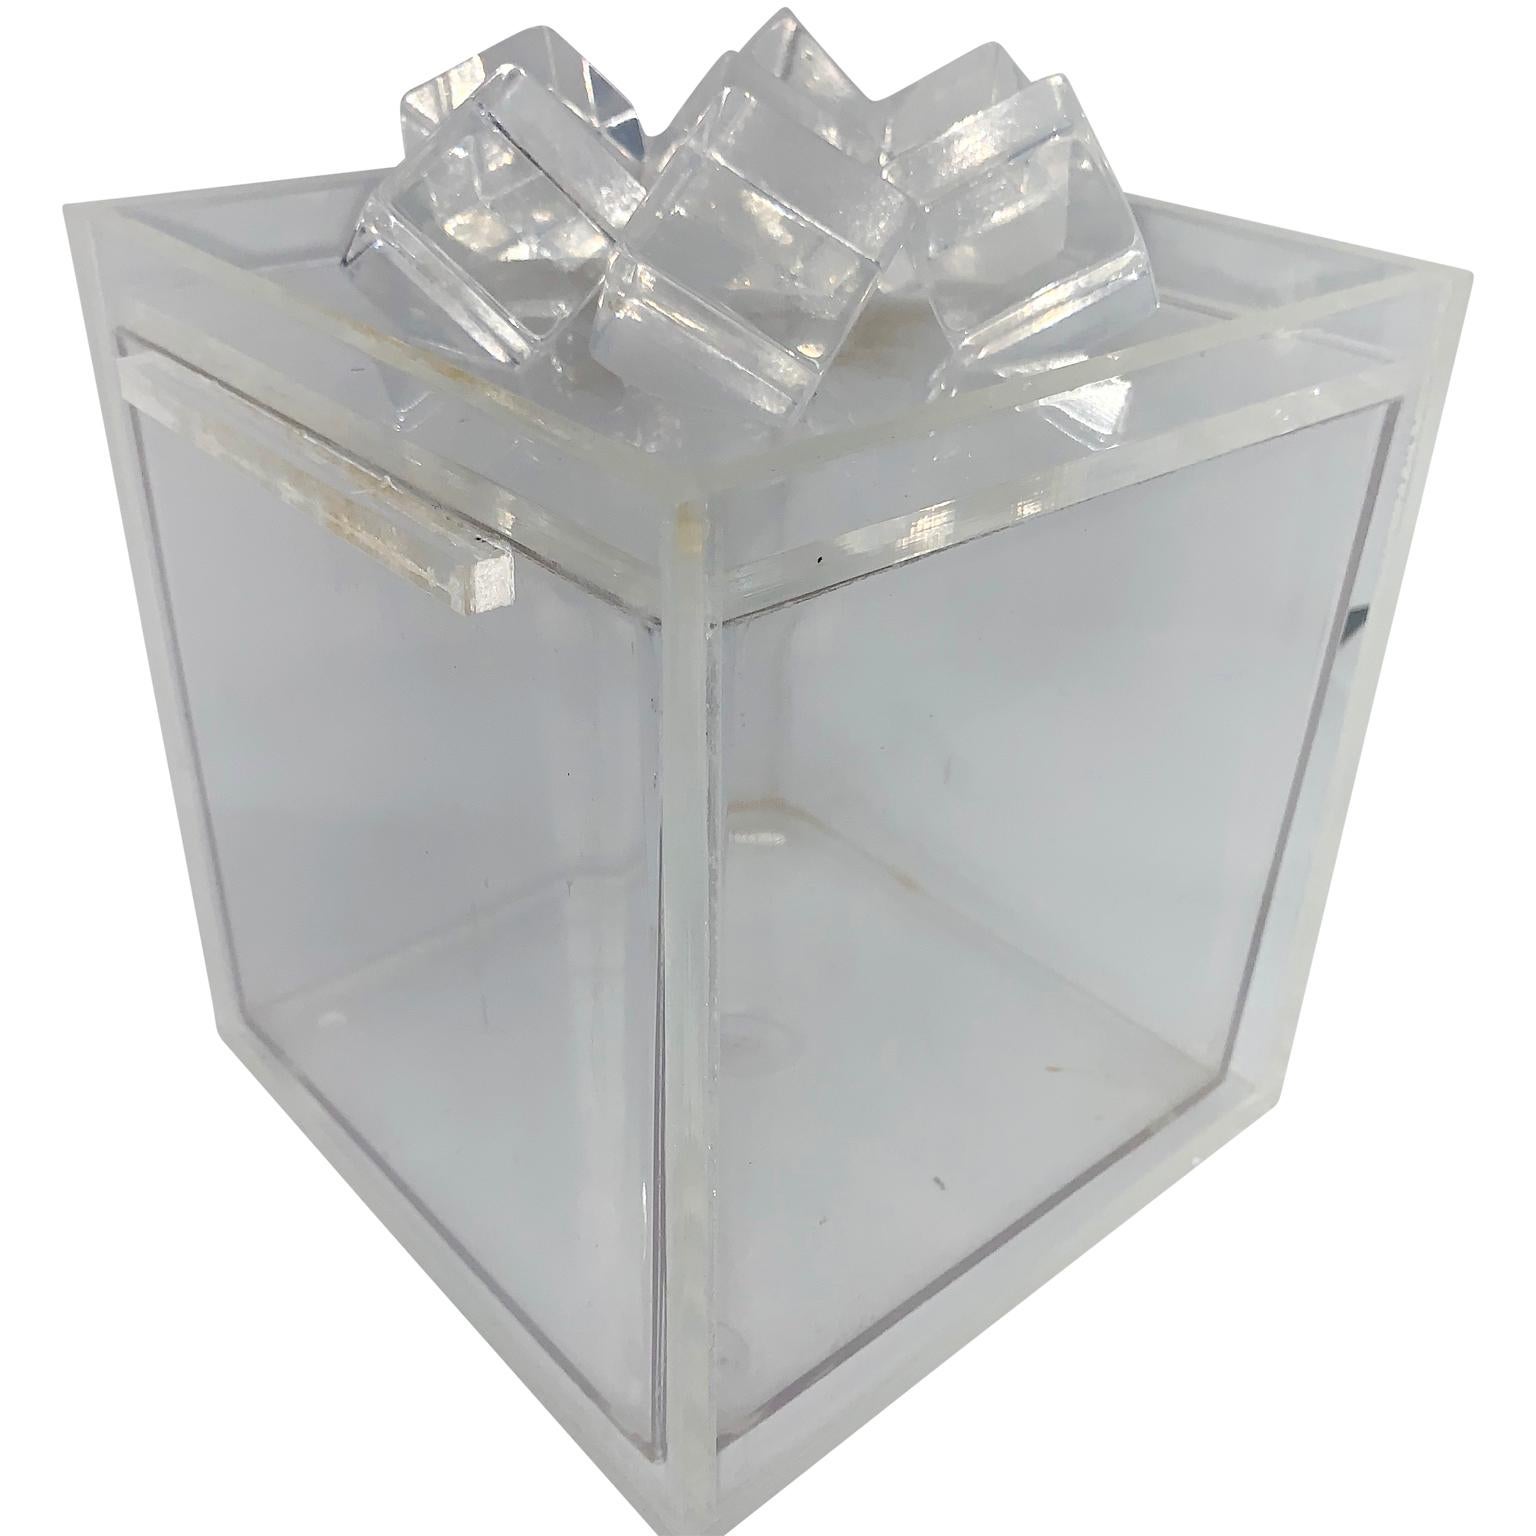 20th Century Mid-Century Modern Acrylic Ice-Cube Topped Ice Bucket